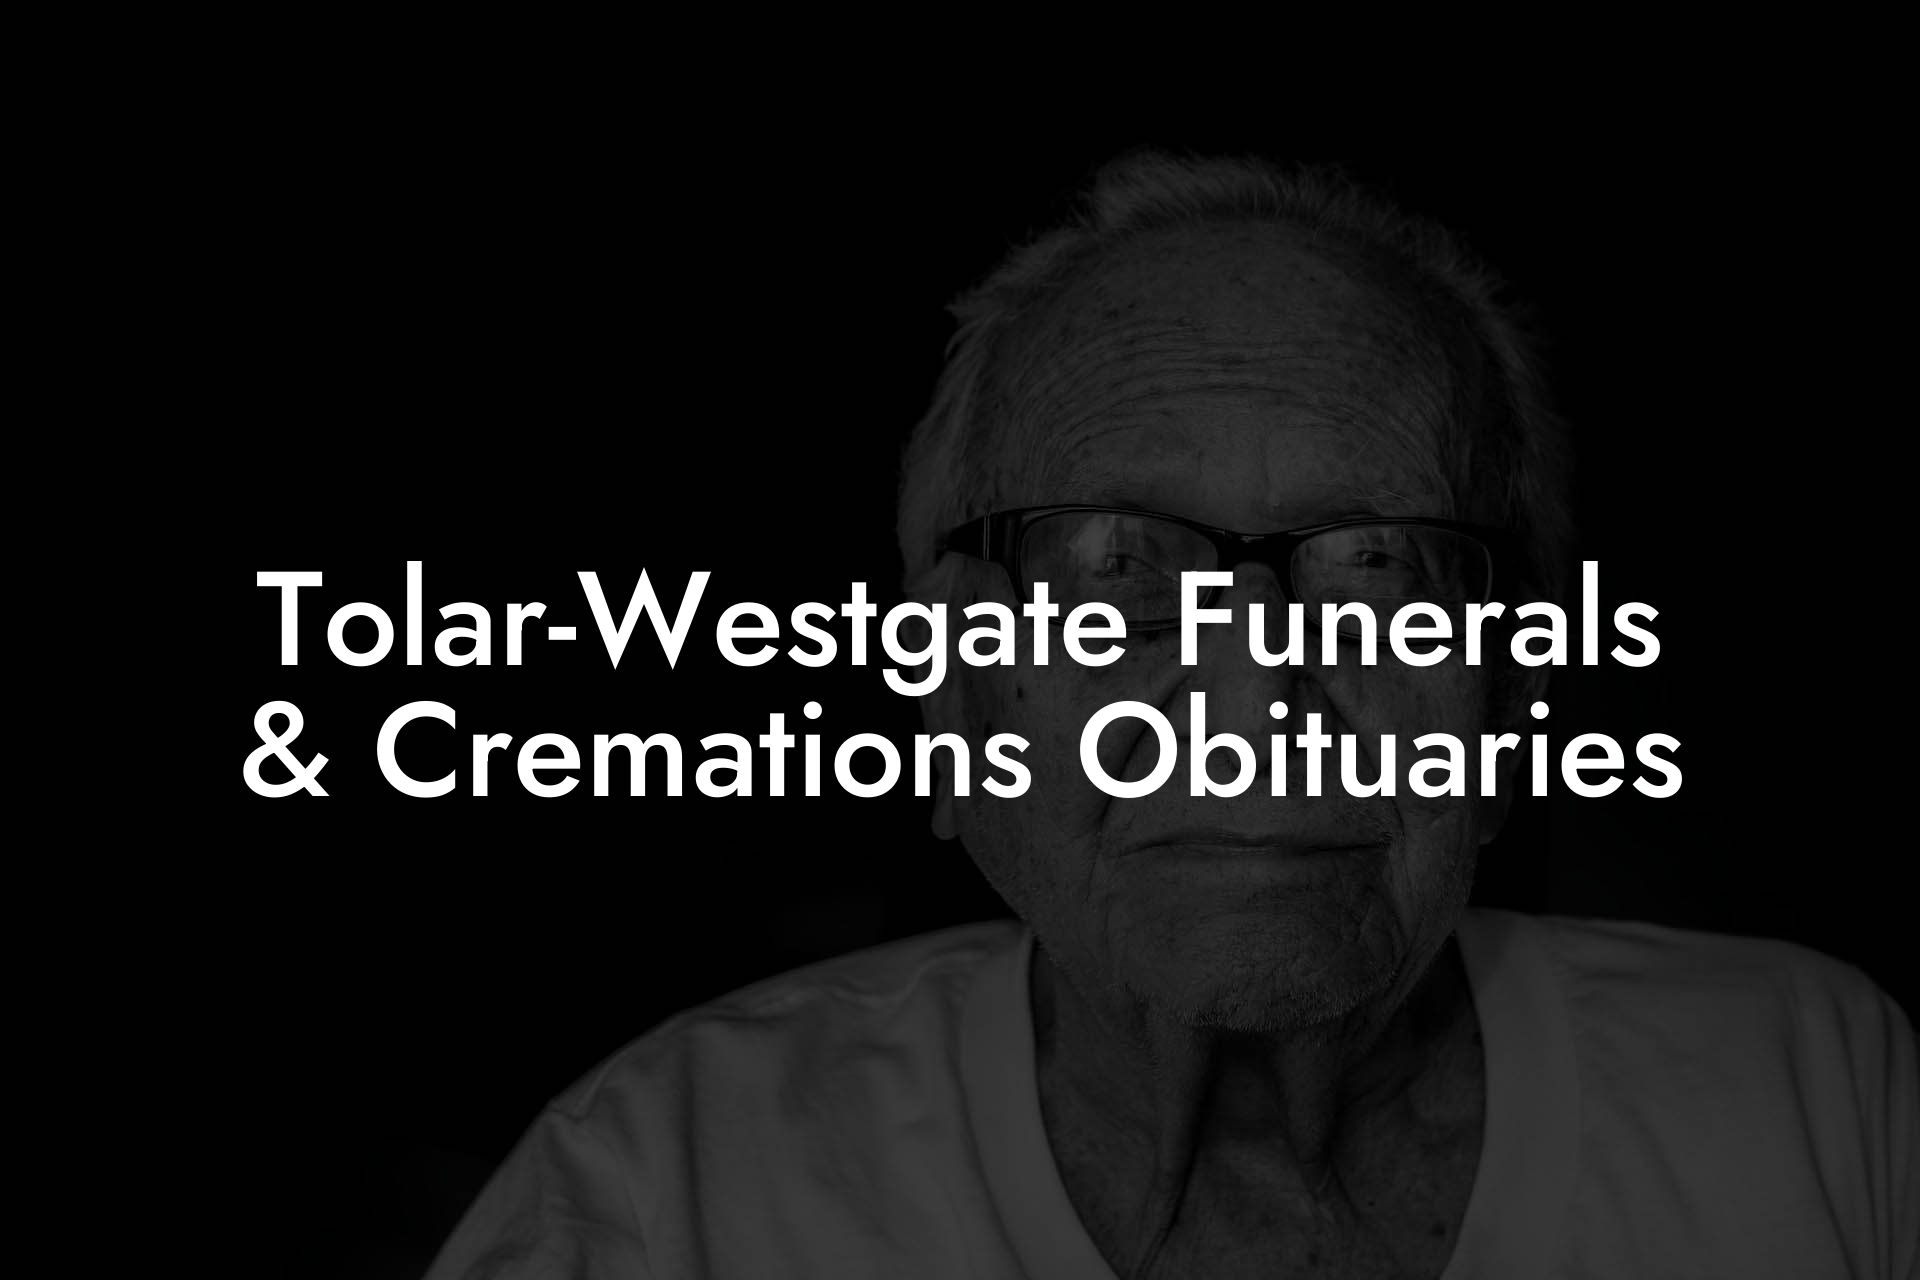 Tolar-Westgate Funerals & Cremations Obituaries